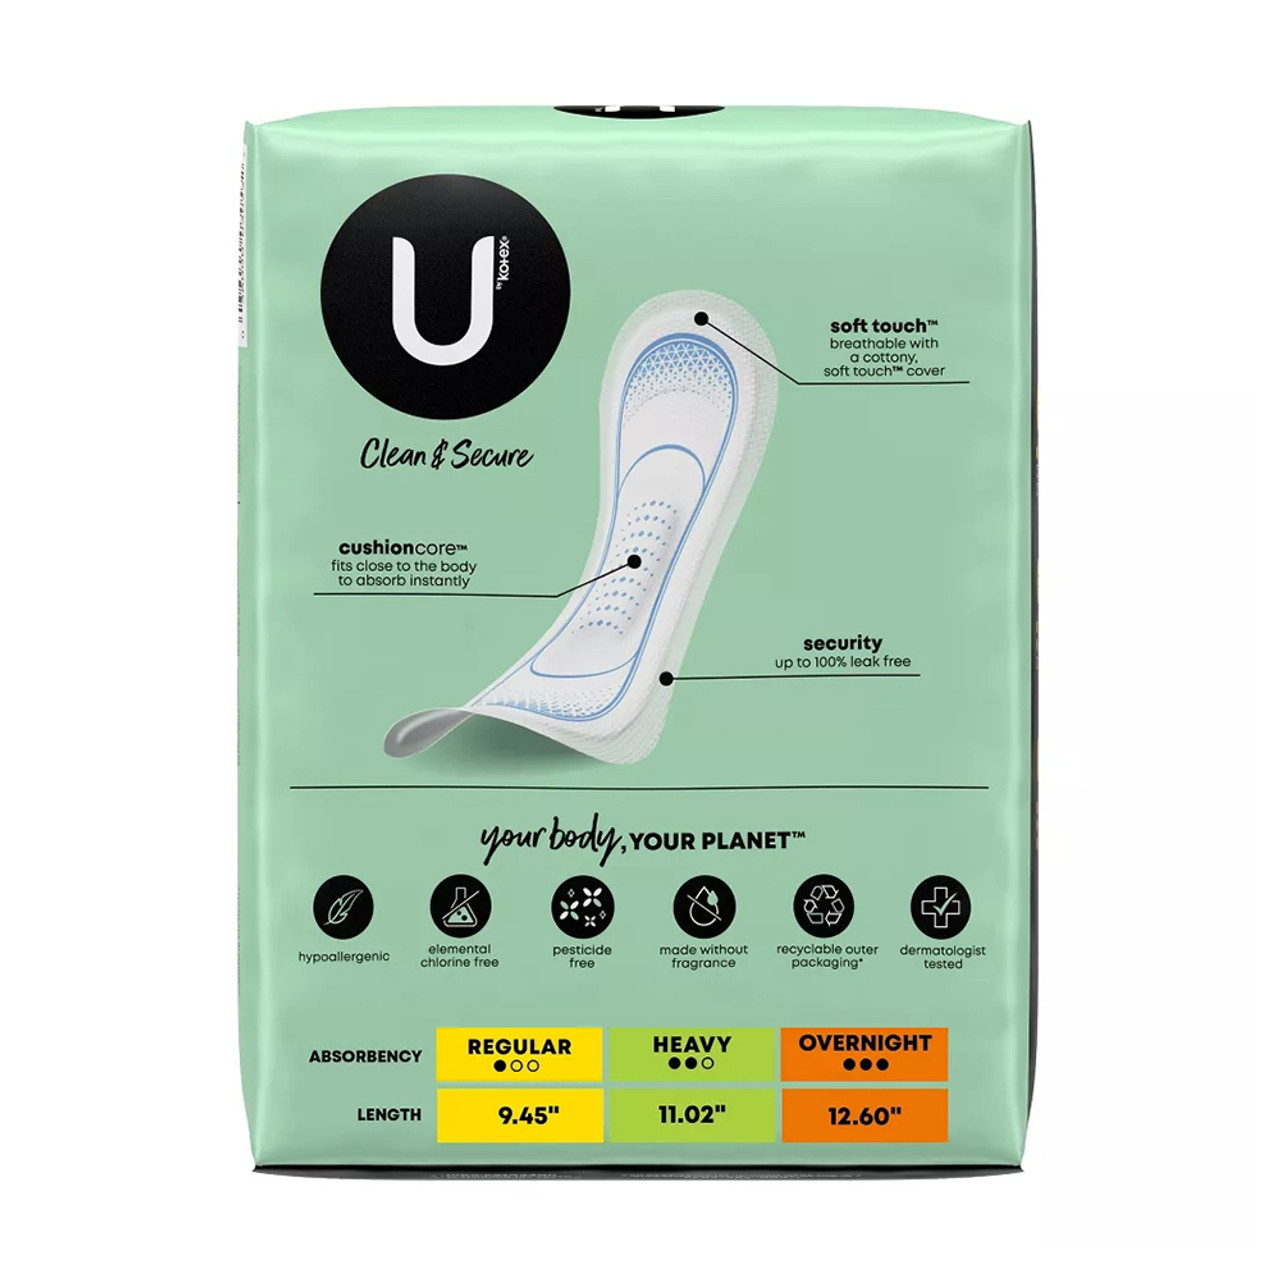 U by Kotex Clean & Secure Ultra Thin Sanitary Pads - Regular - 22's